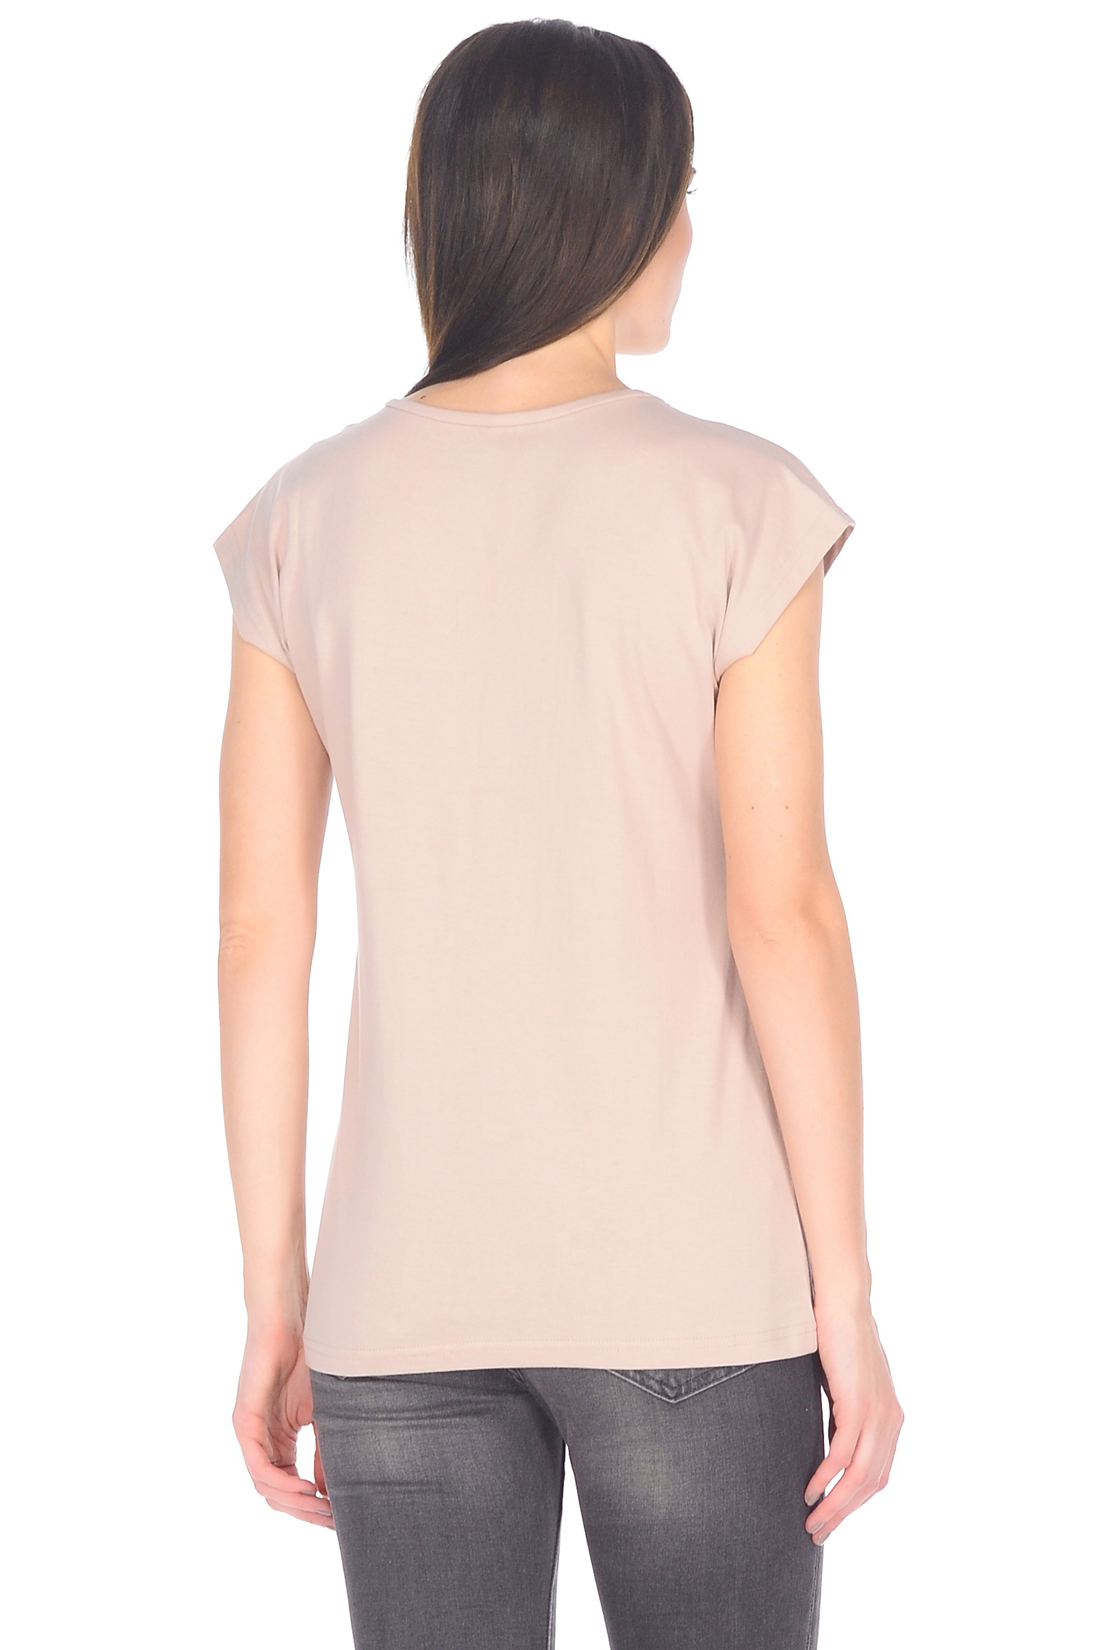 Бежевая футболка с принтом (арт. baon B238085), размер XXL, цвет бежевый Бежевая футболка с принтом (арт. baon B238085) - фото 2